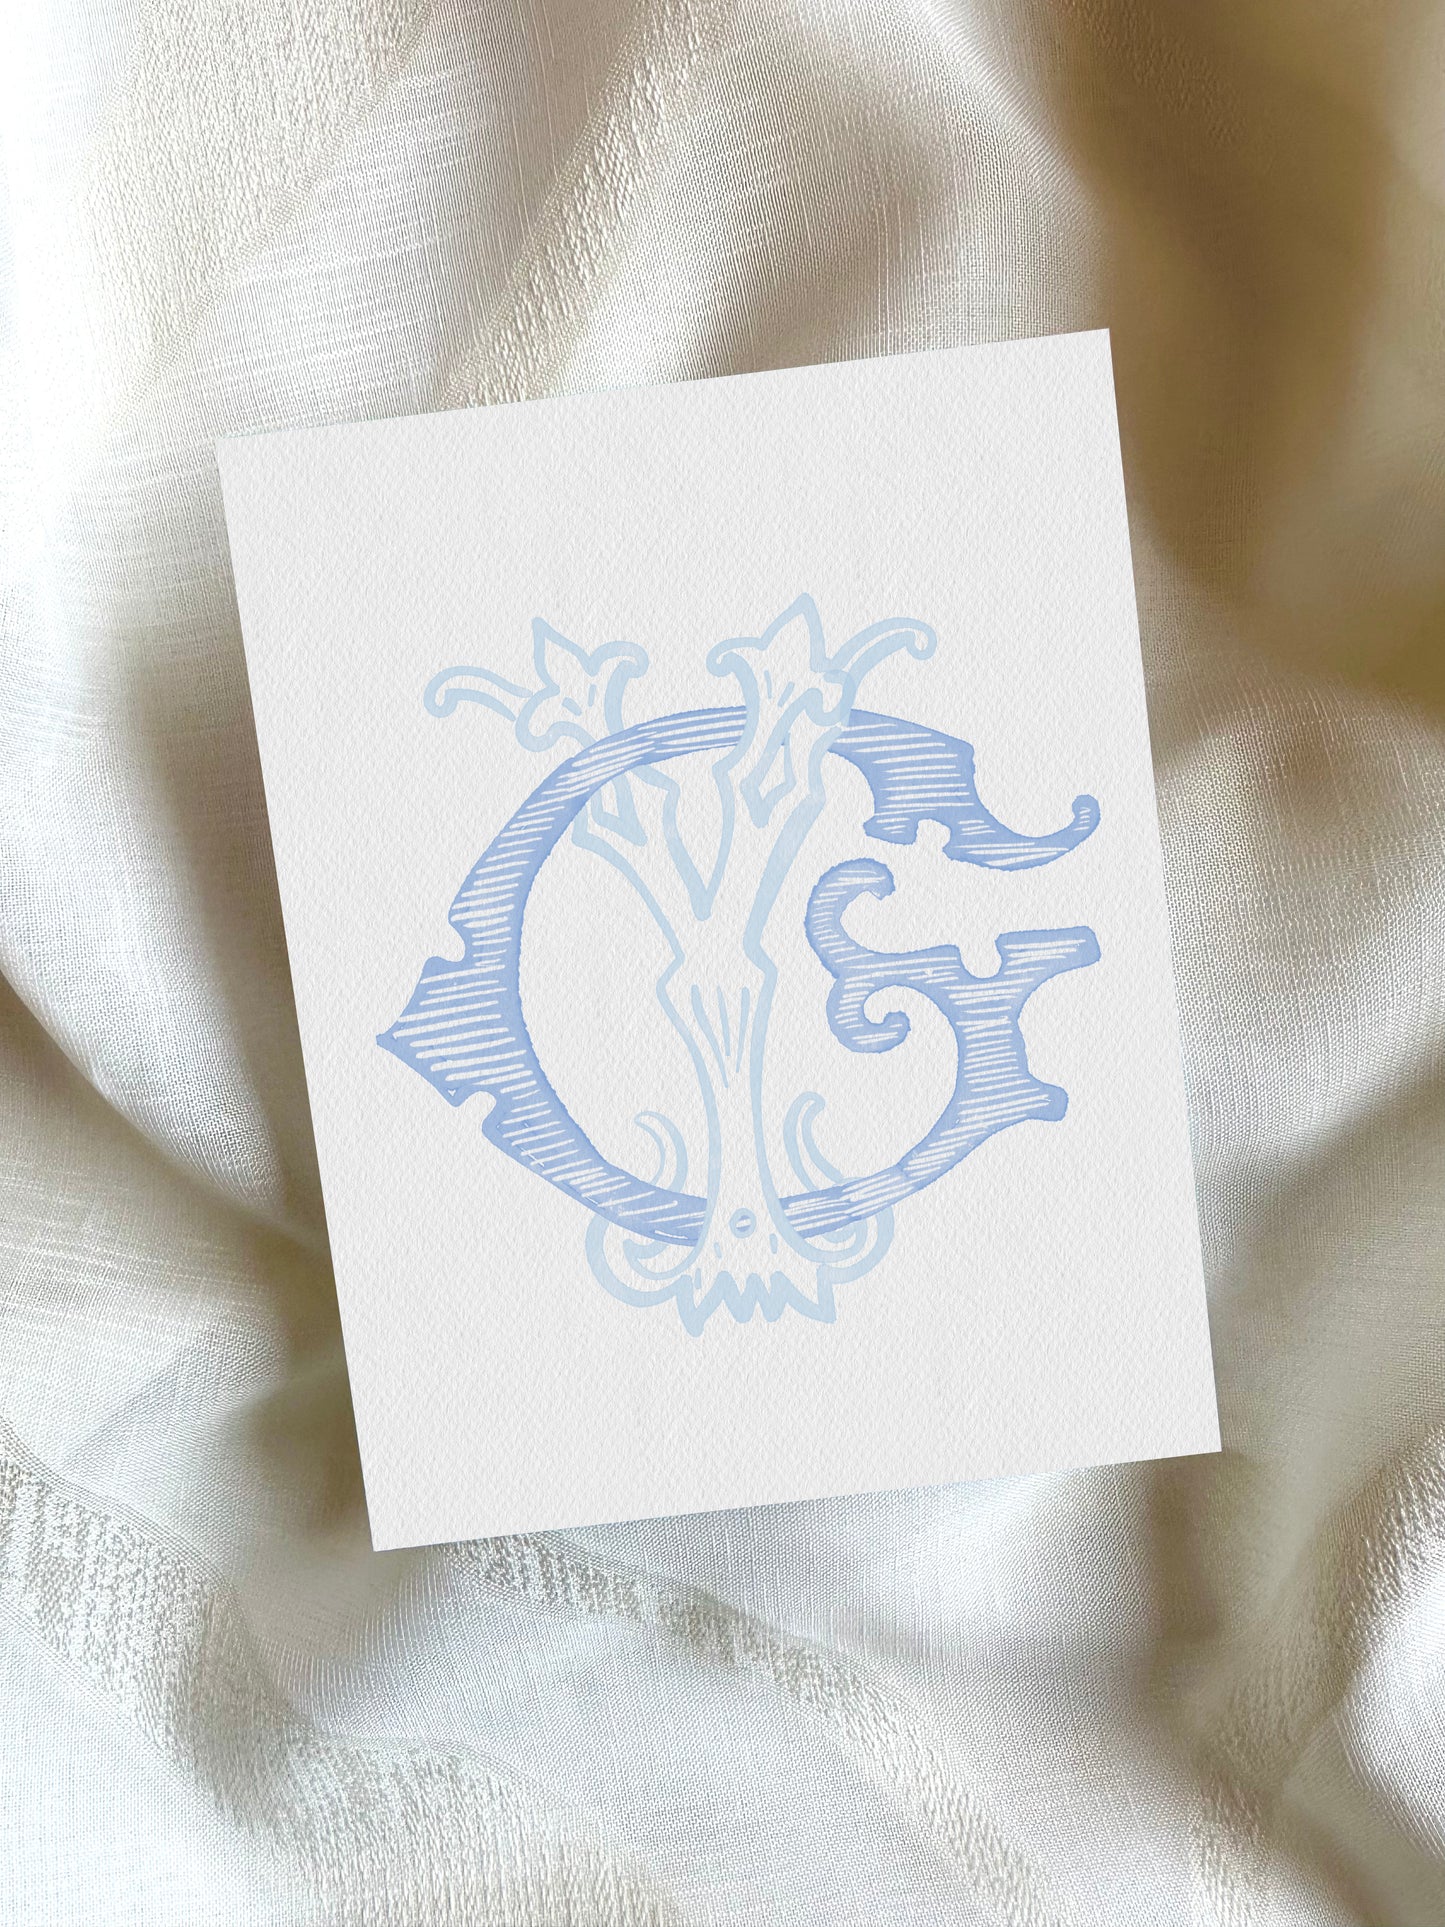 2 Letter Monogram with Letters GY YG | Digital Download - Wedding Monogram SVG, Personal Logo, Wedding Logo for Wedding Invitations The Wedding Crest Lab